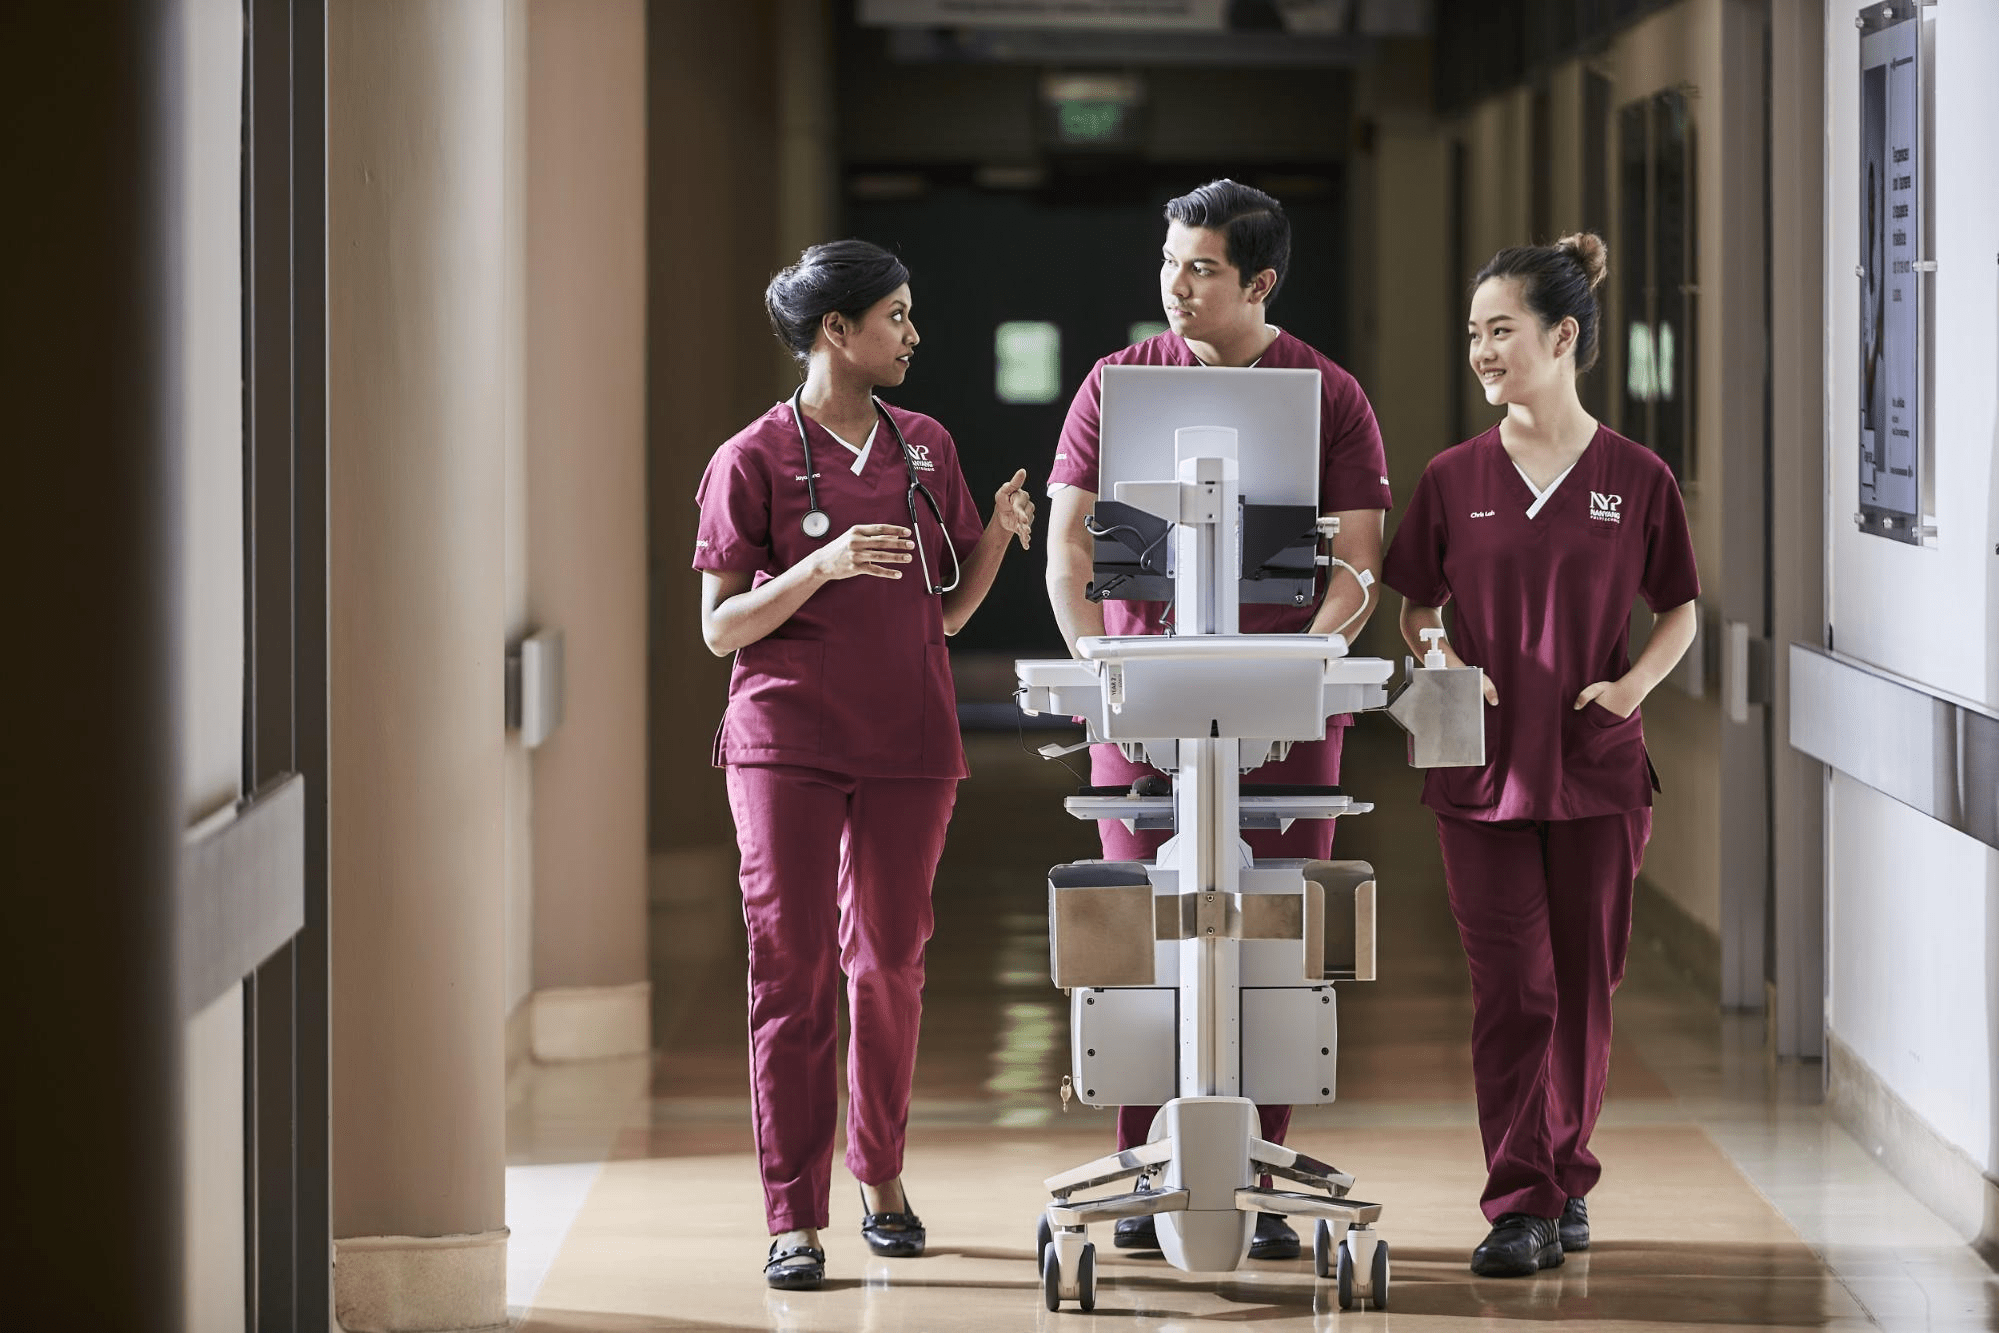 nurses walking in a hallway